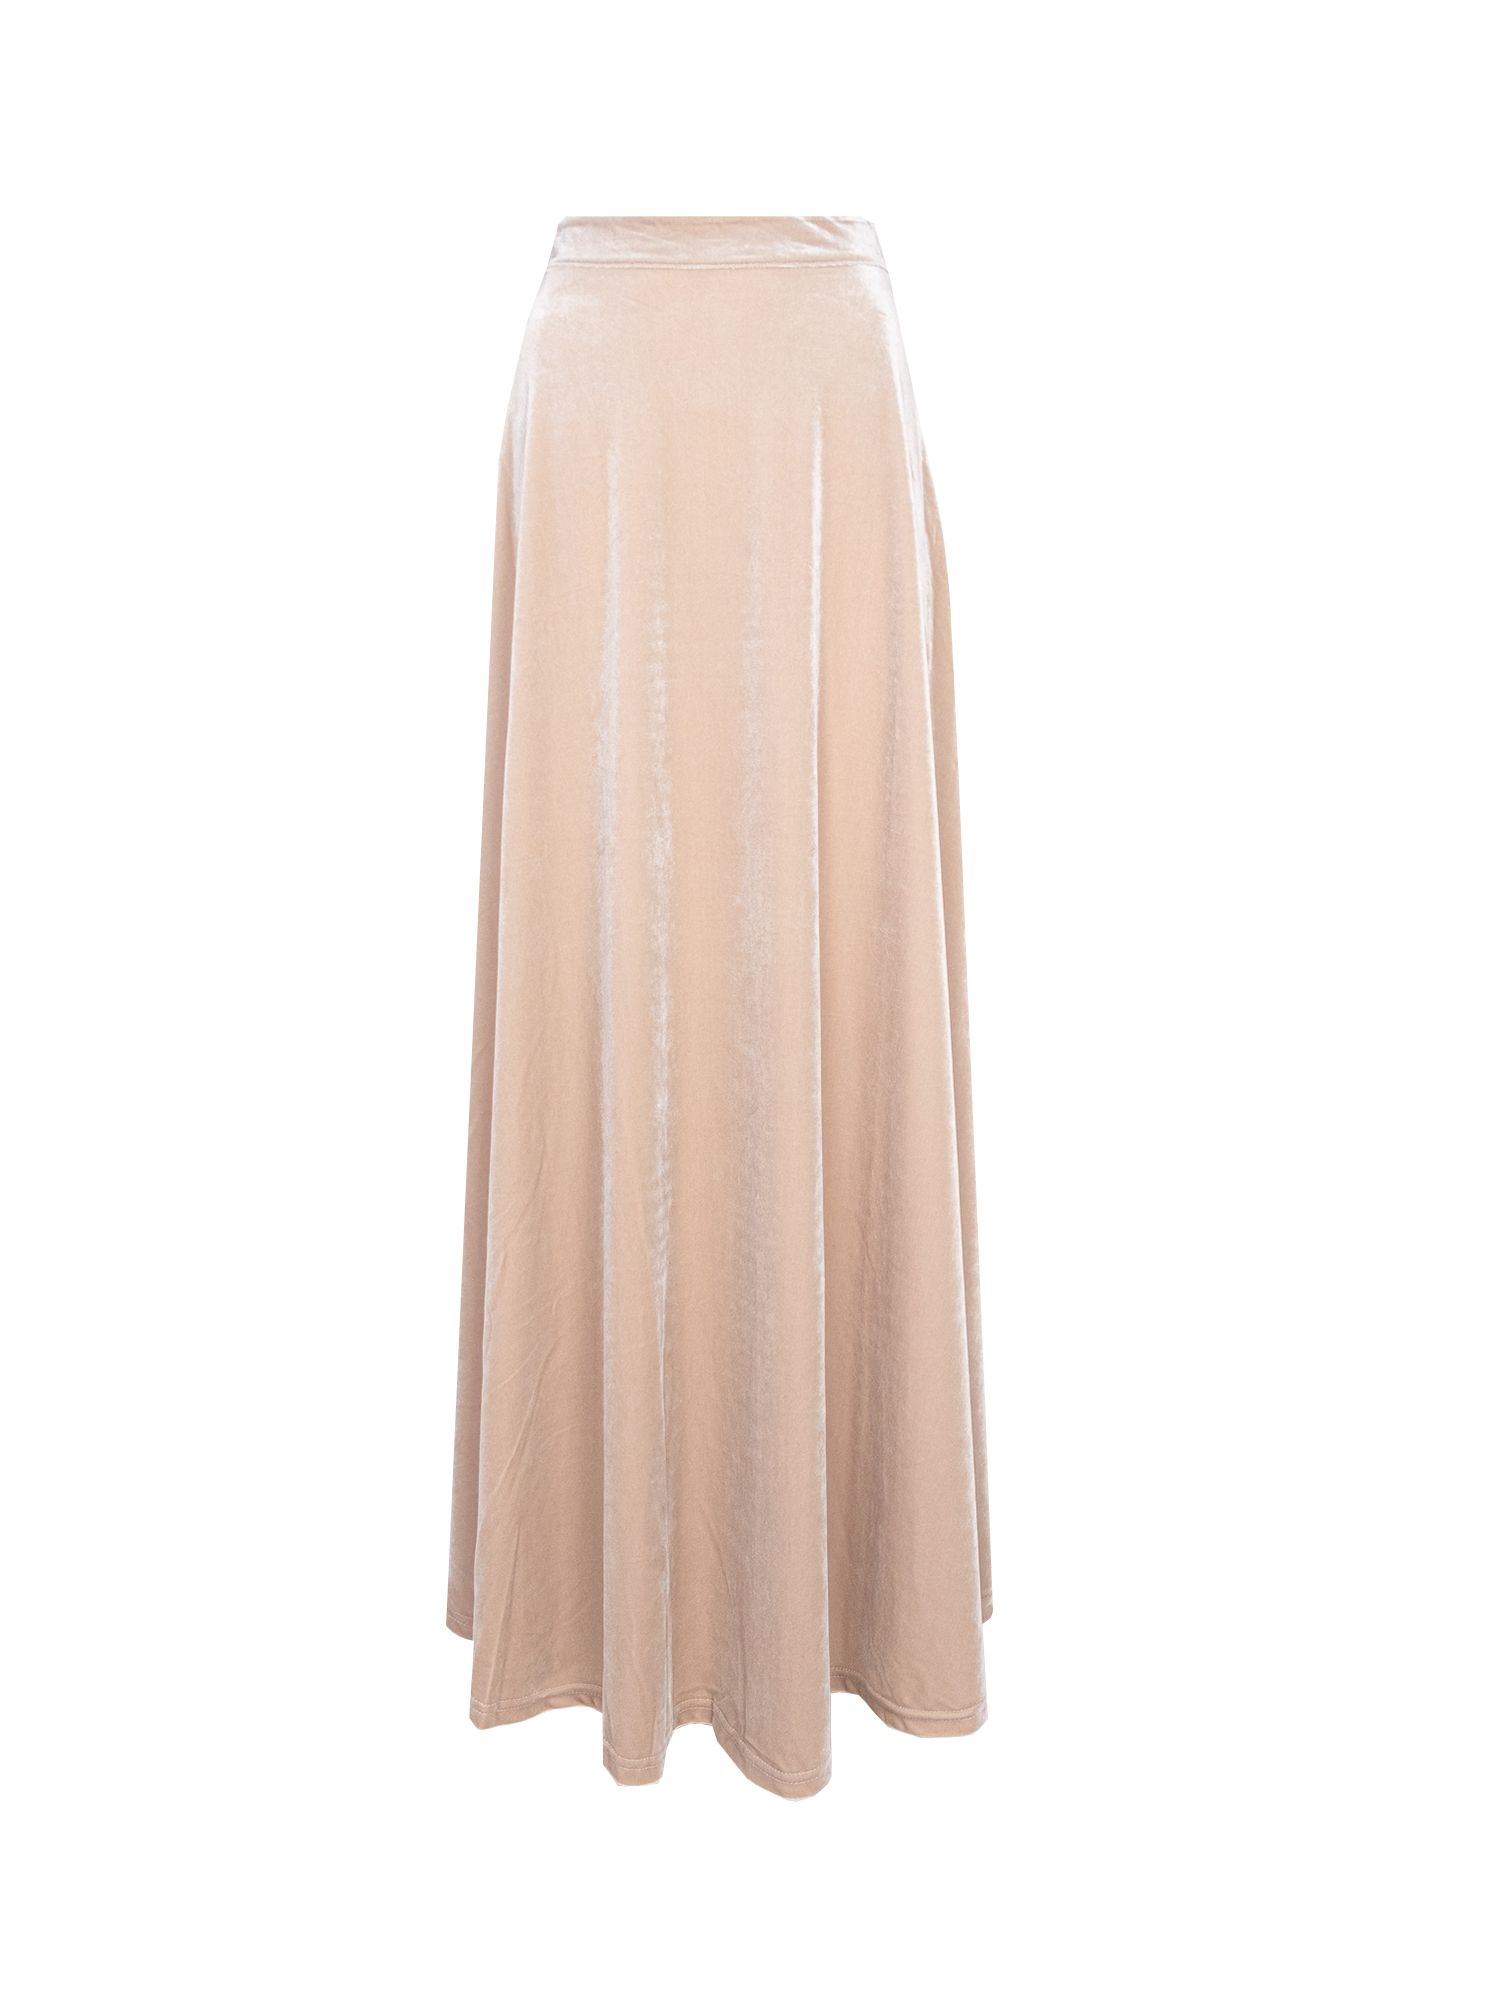 TOSCA - long skirt in beige chenille